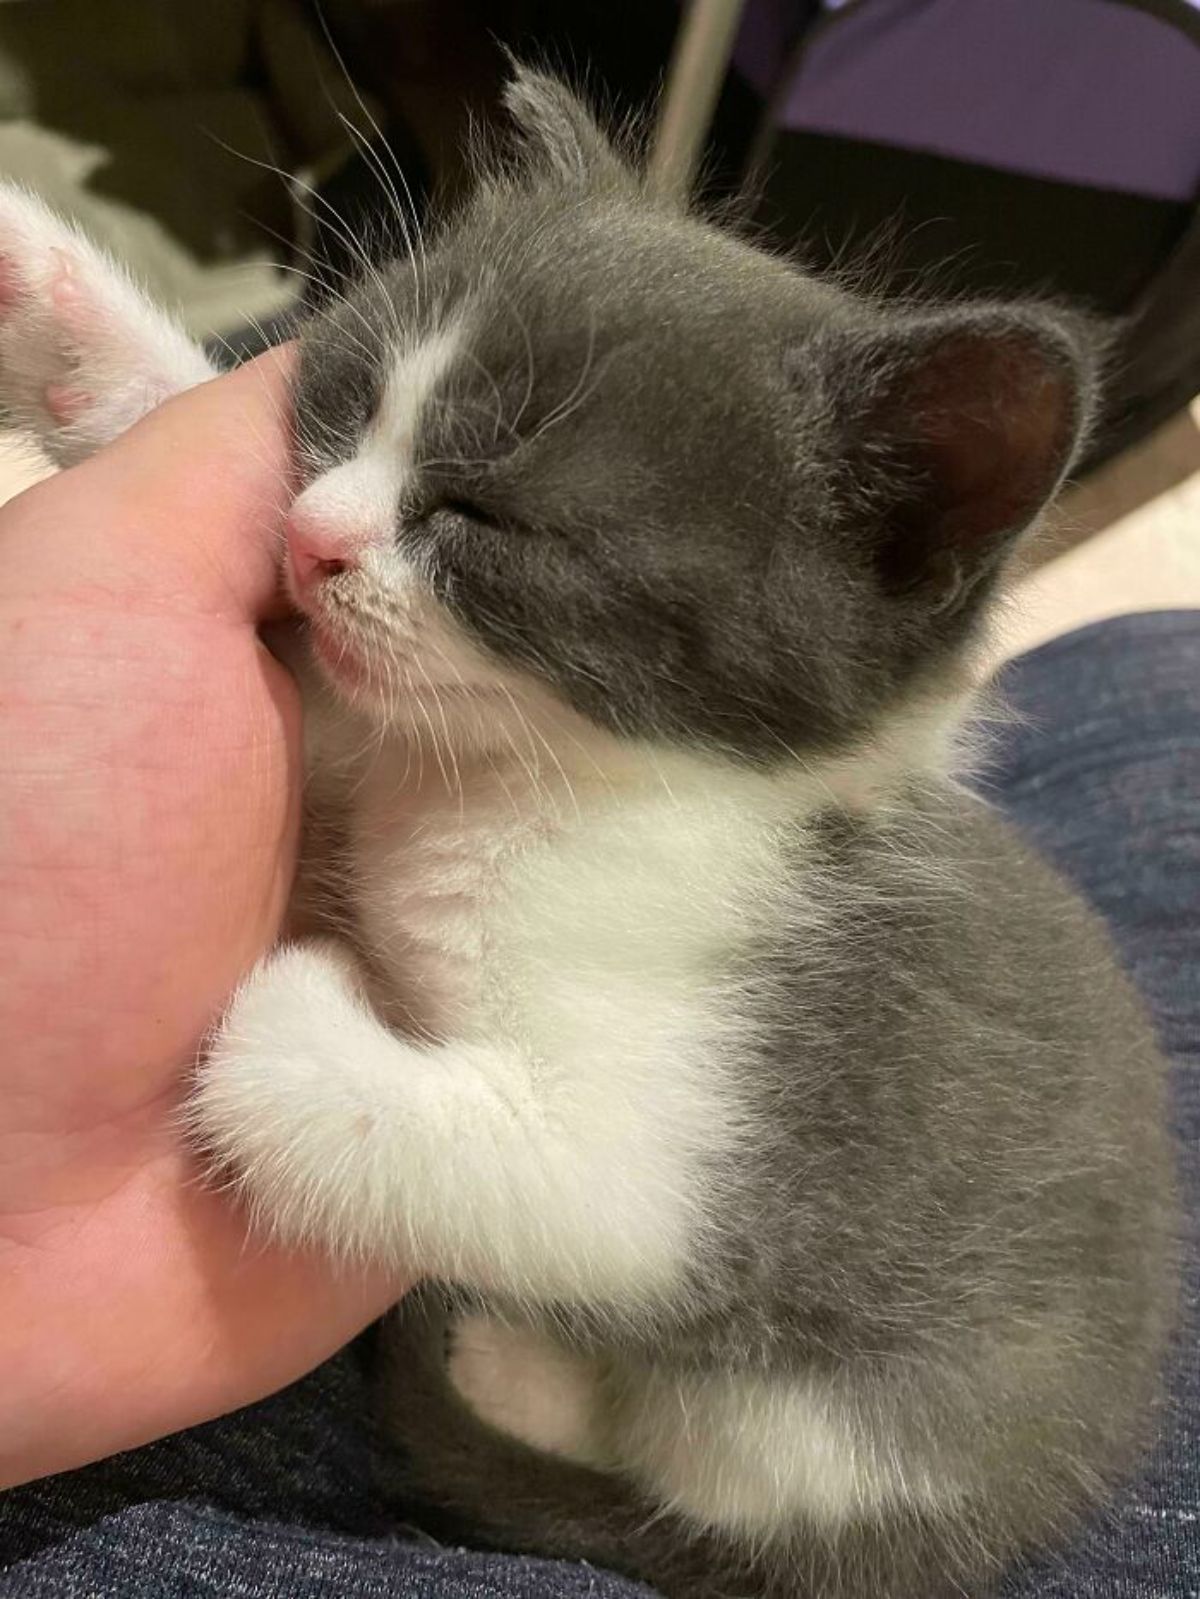 black and white kitten fallen asleep on someone's hand